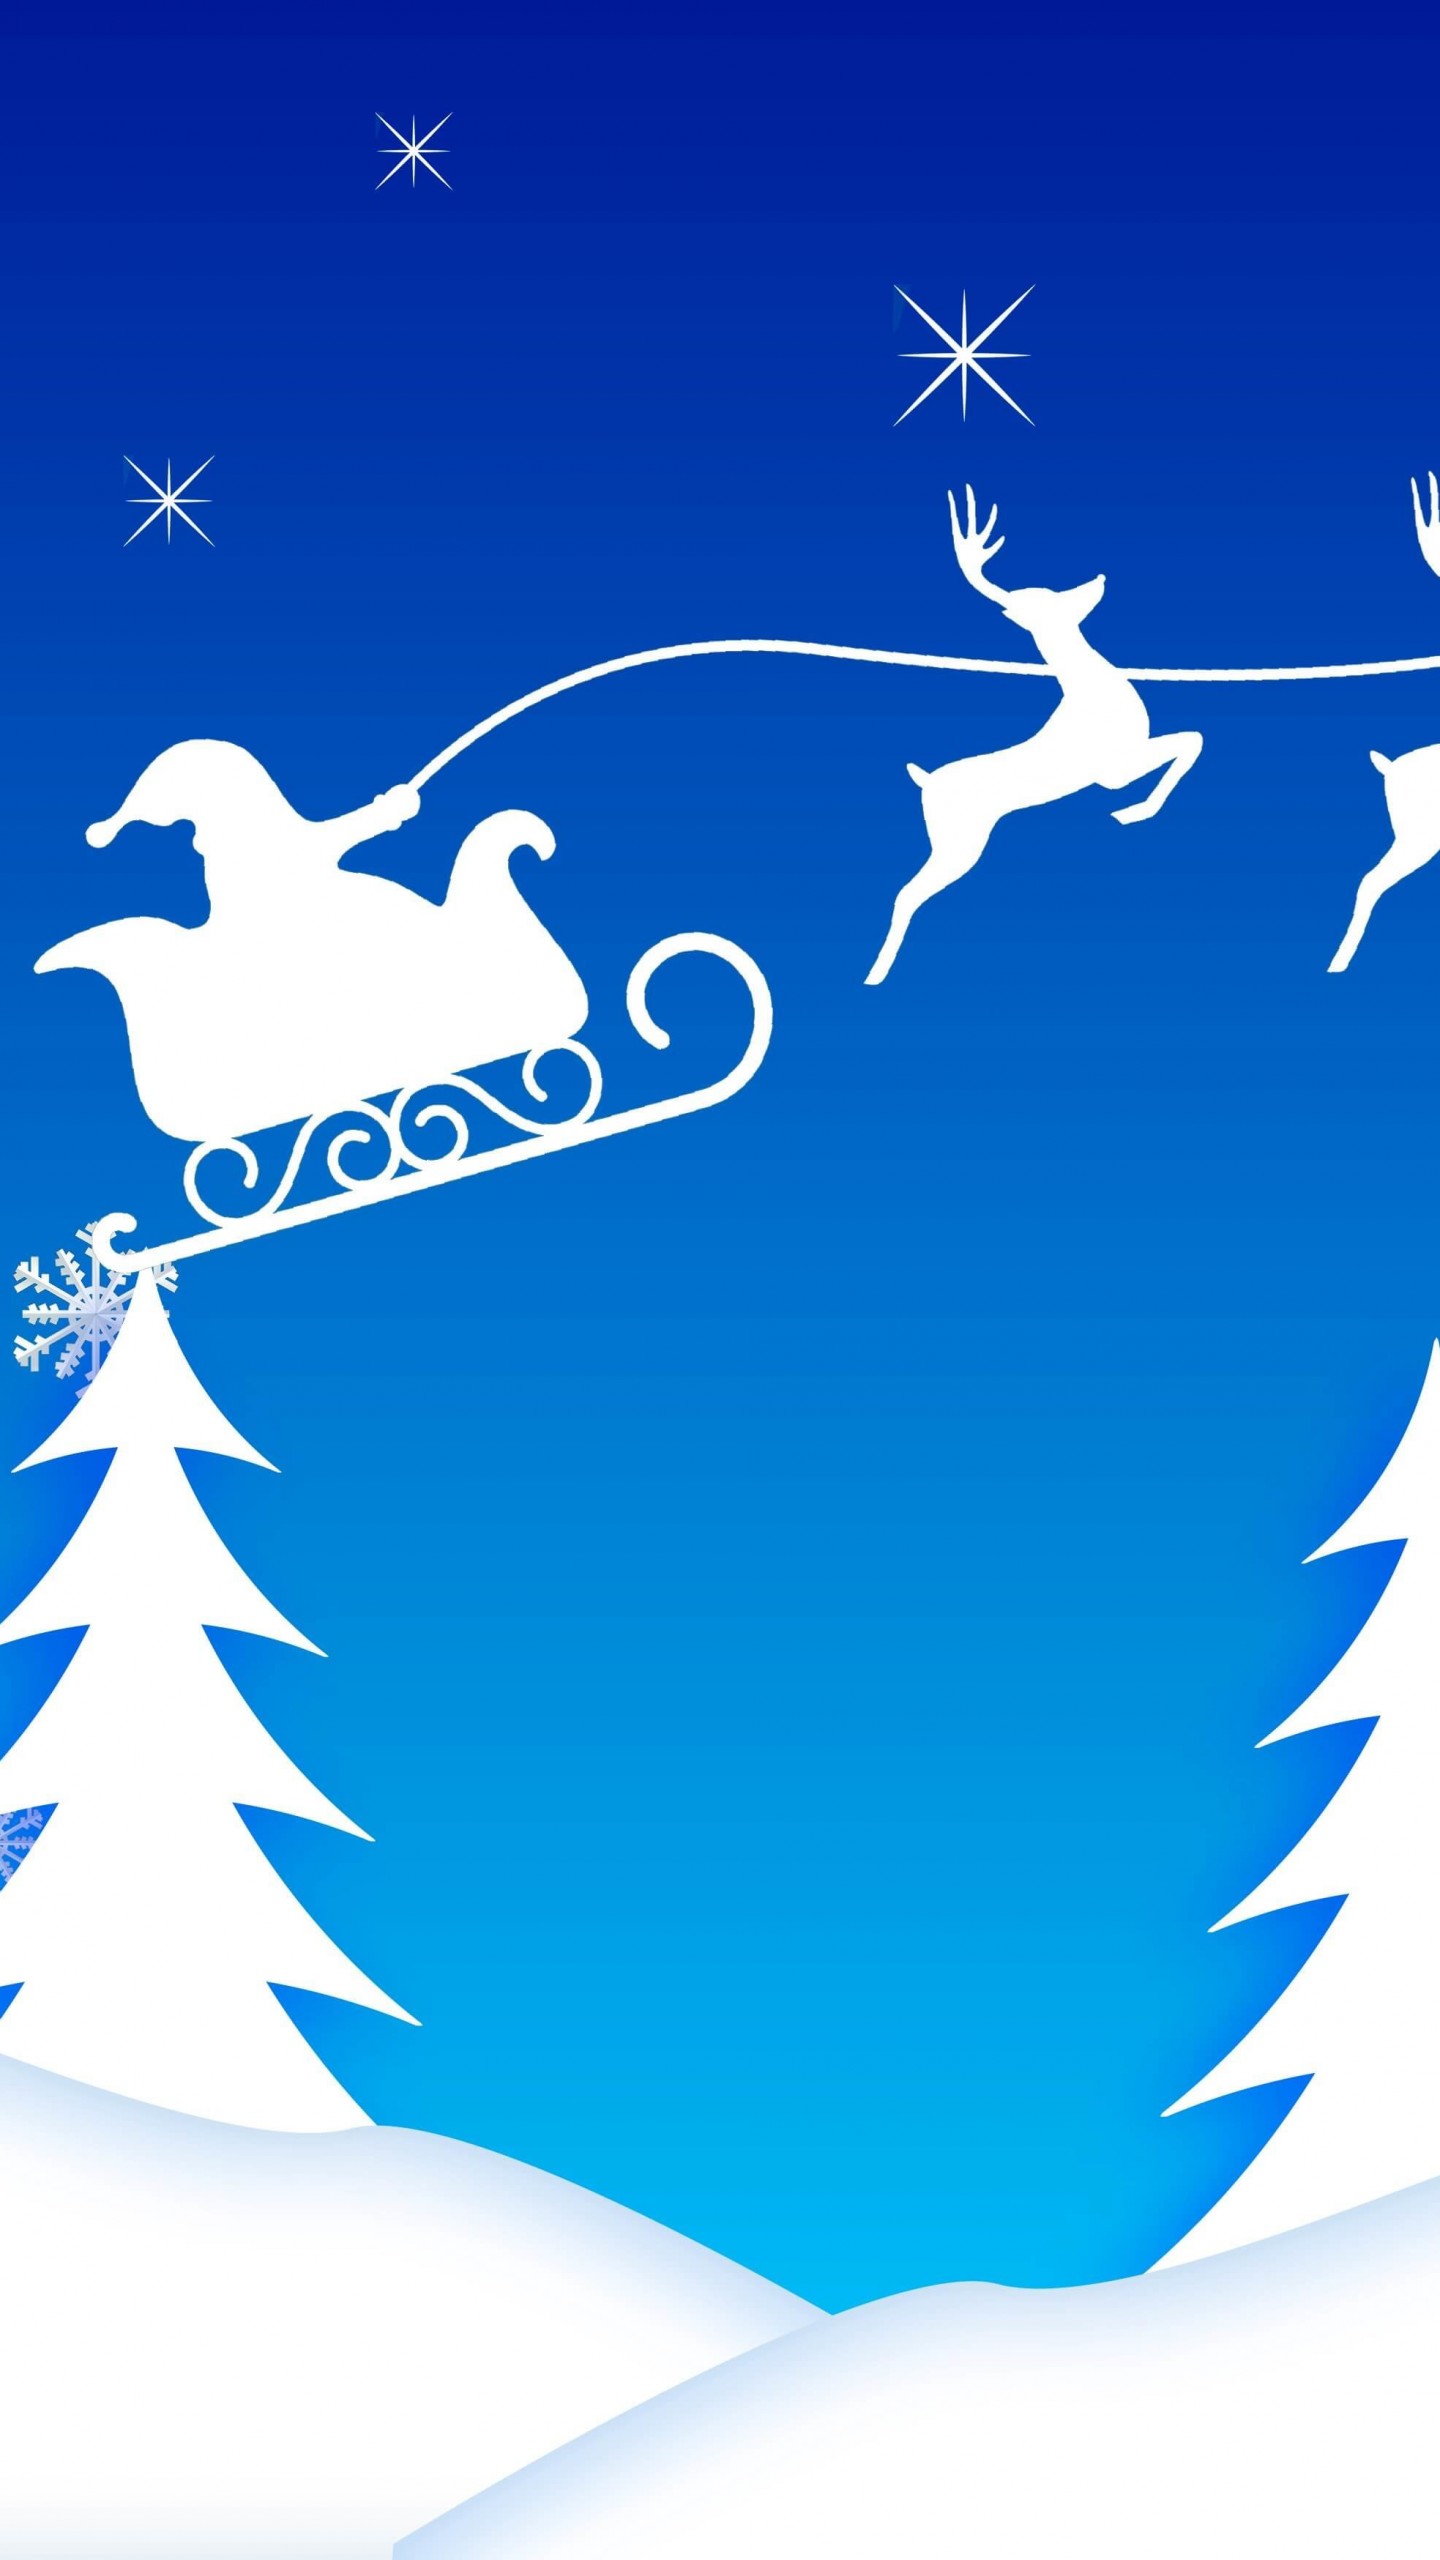 Santa’s Sleigh Illustration Wallpaper for SAMSUNG Galaxy S6